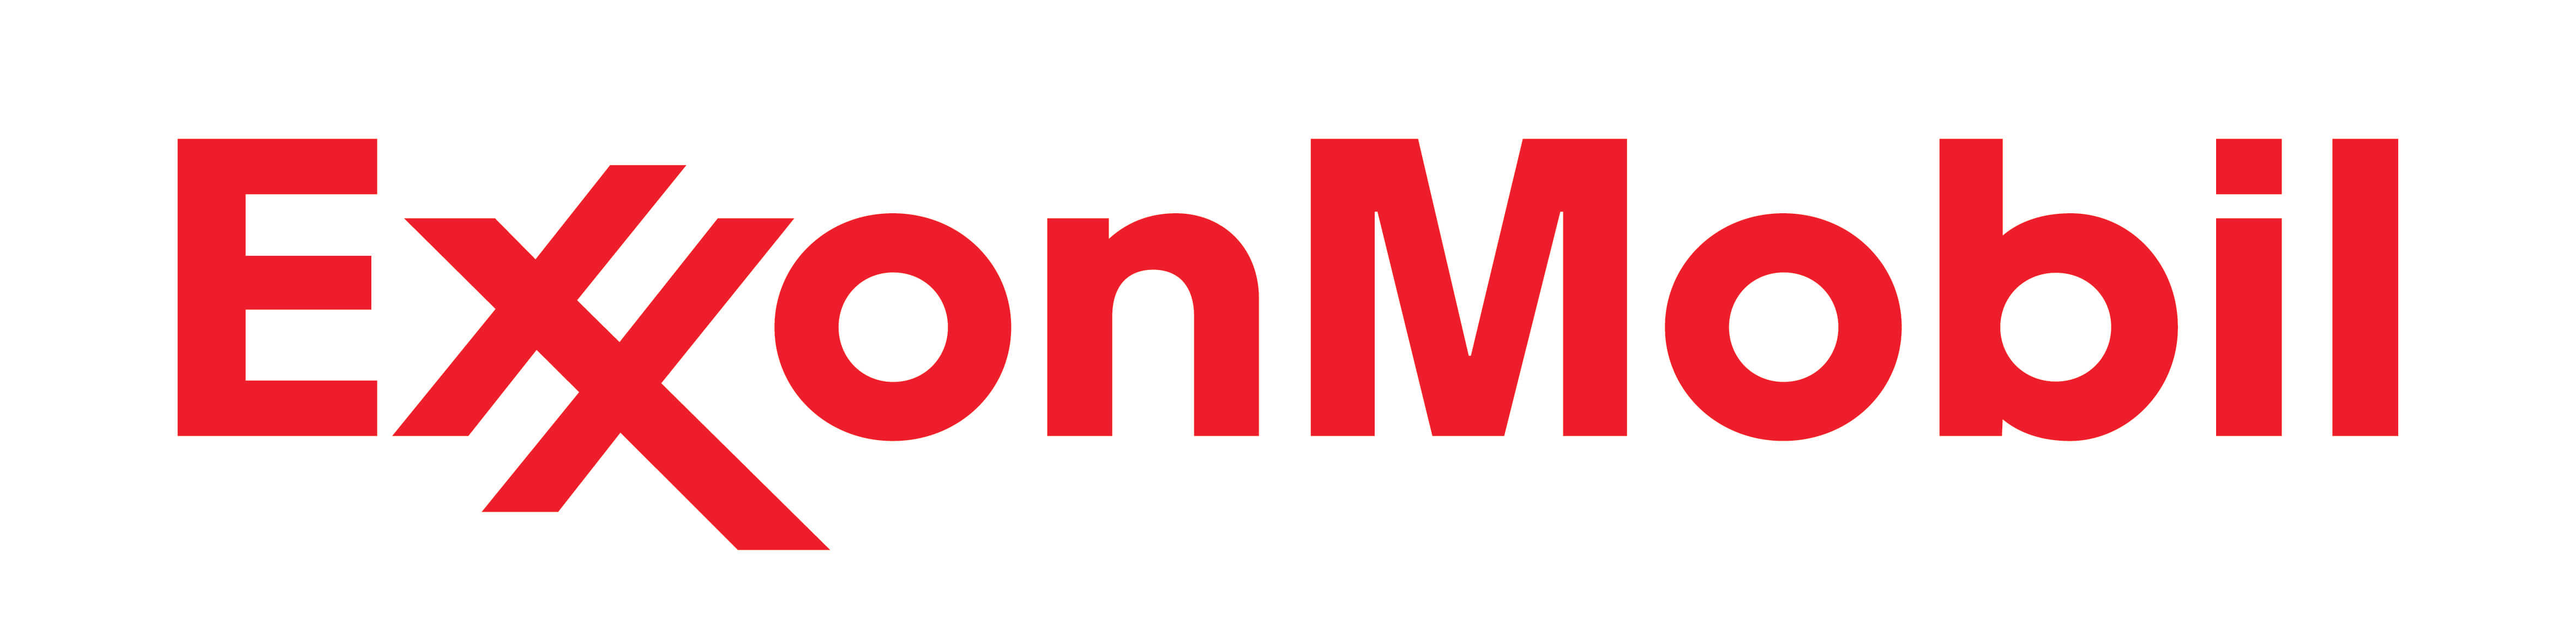 Exxonmobil Logo (1)